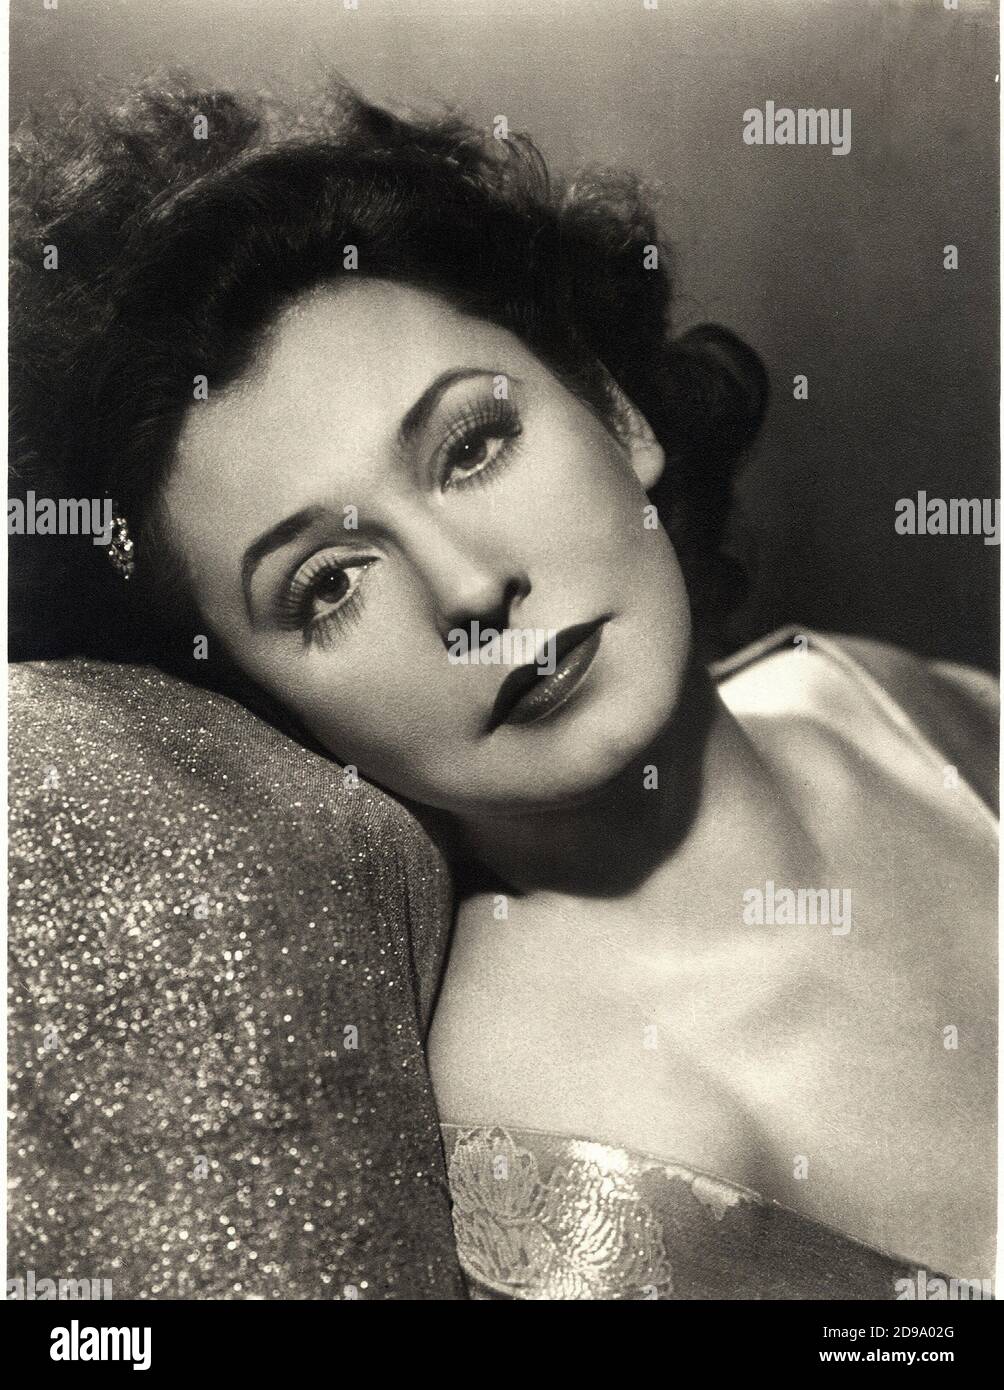 1936 c, GERMANY :  The  Nazi Diva german singer and movie actress  ZARAH LEANDER  ( born Zarah Stina Hedberg , 1907 - 1981 ) - MOVIE - CINEMA - CANTANTE - NAZIST - NAZISMO - WWII - SECONDA GUERRA MONDIALE - portrait - ritratto ----  Archivio GBB Stock Photo